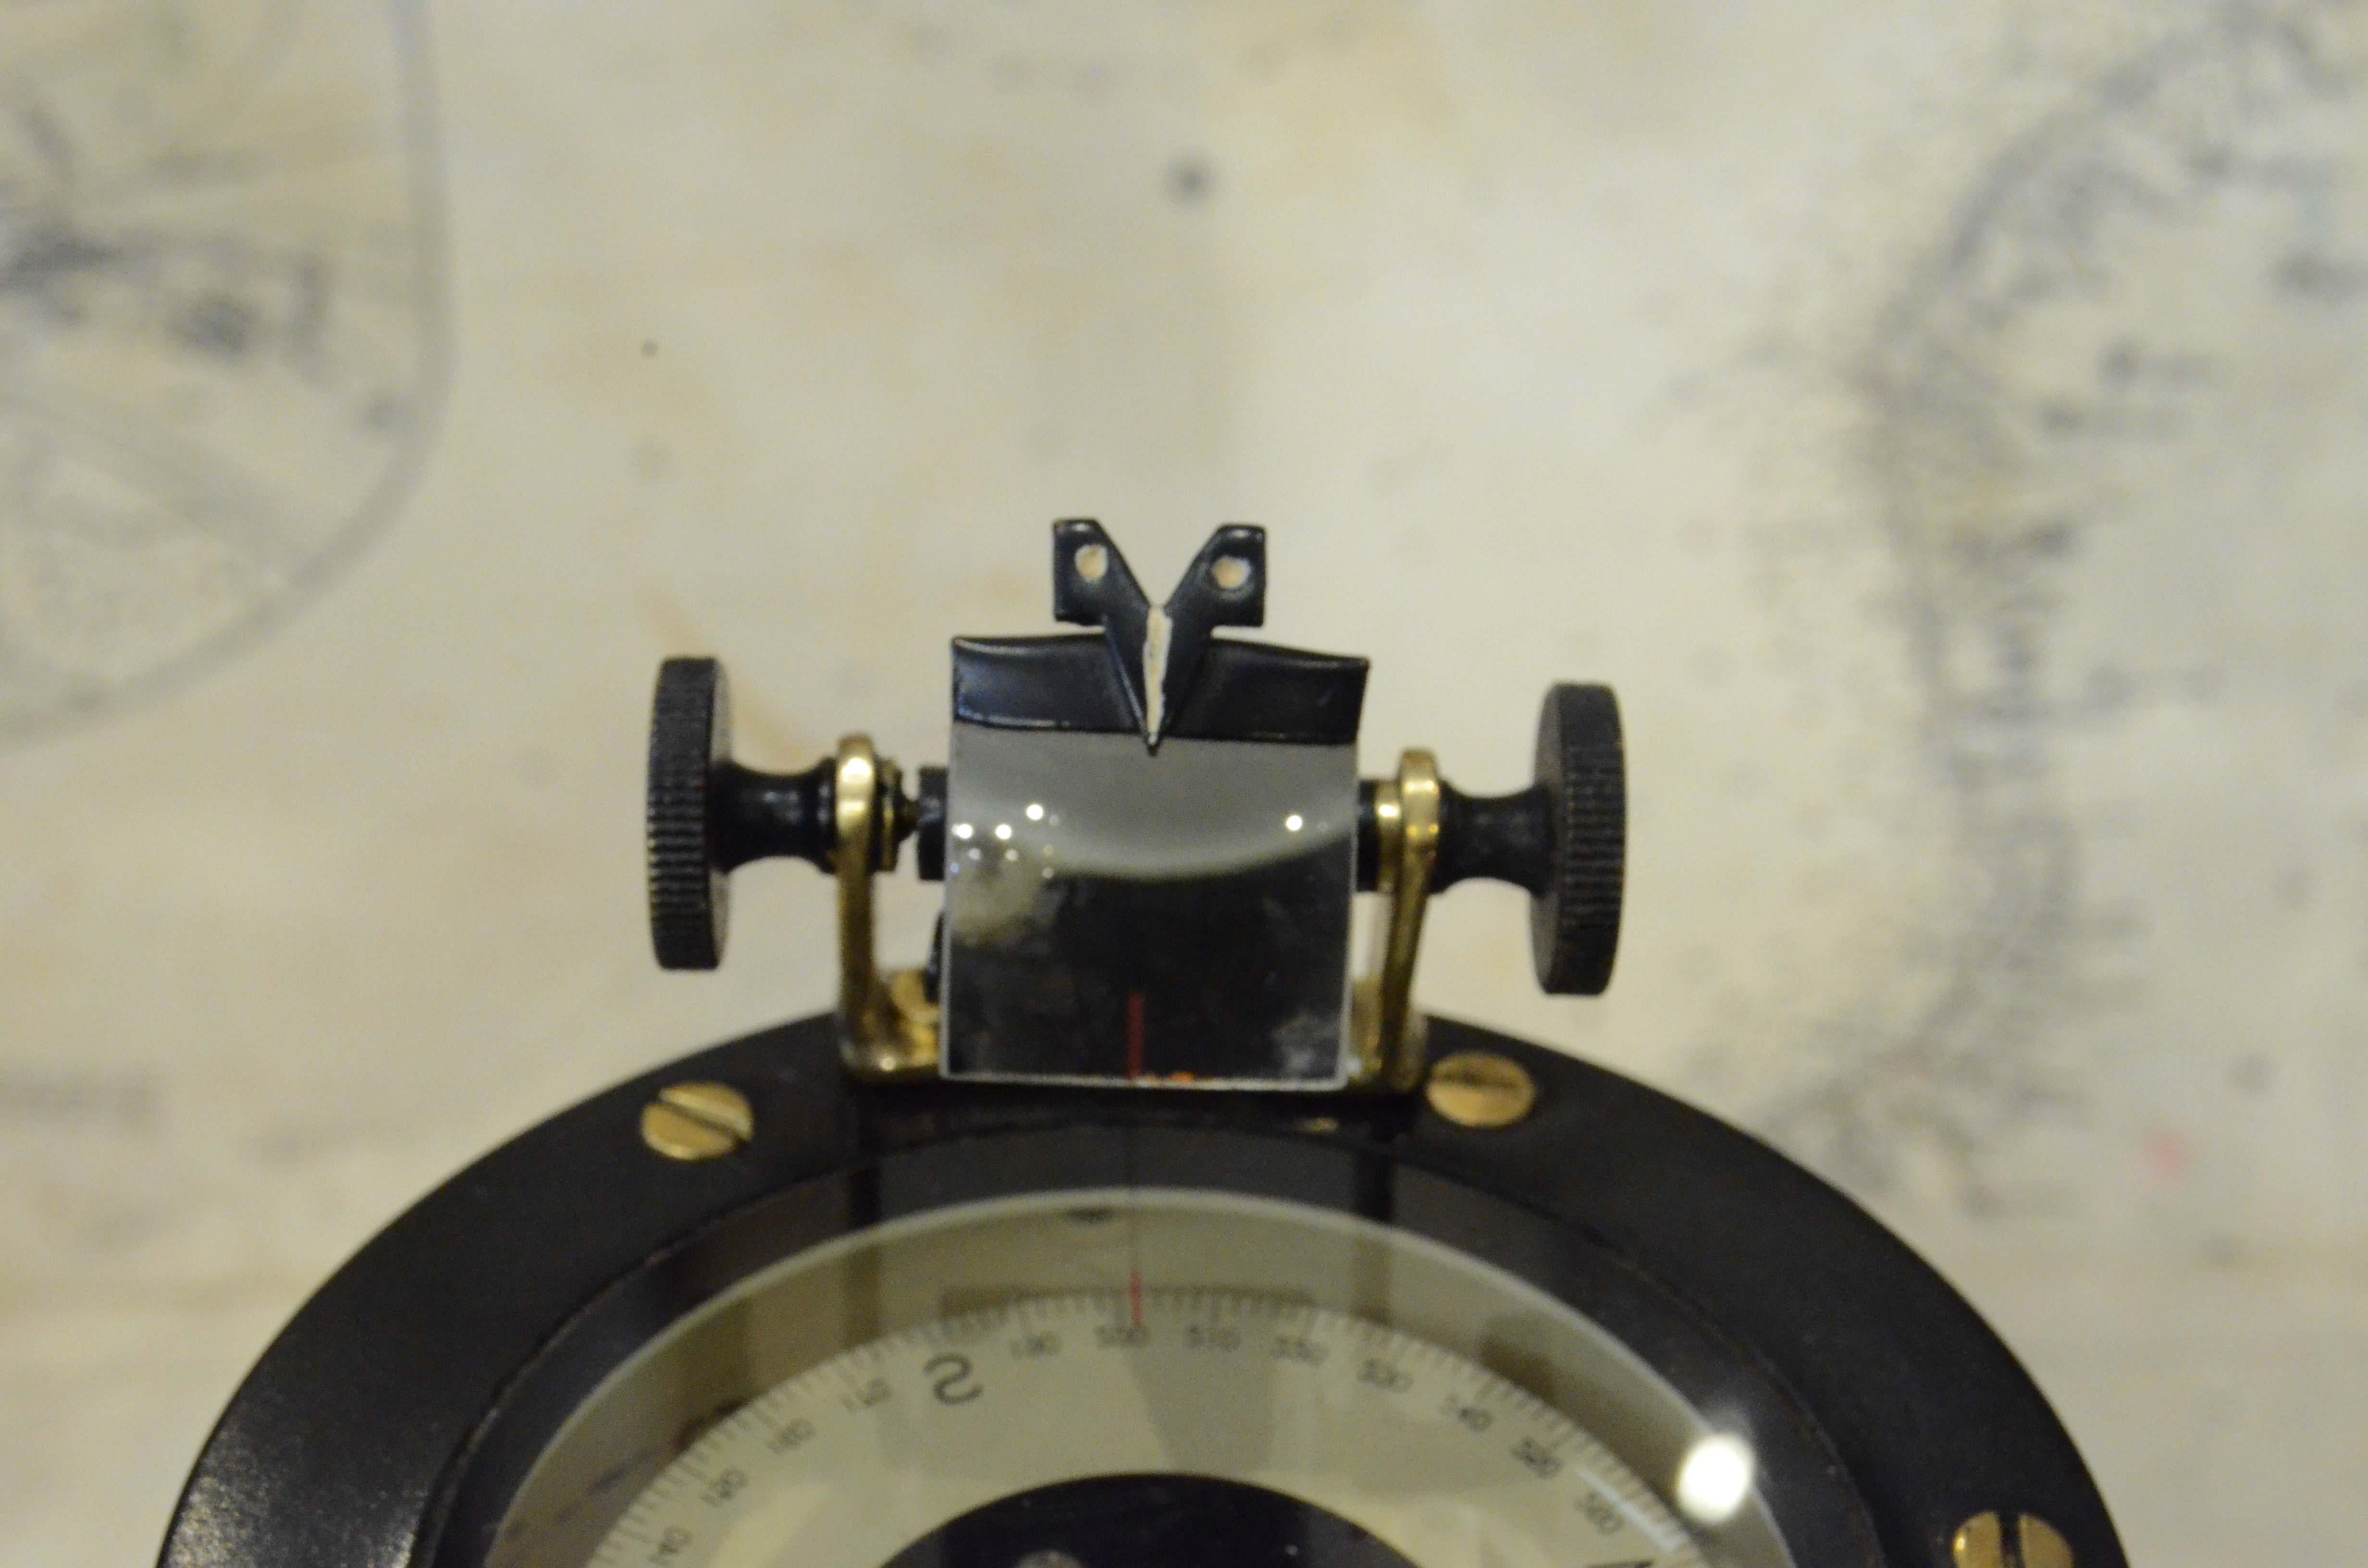 Mid-20th Century 1950s Japan Saura Hand-Held Magnetic Bakelite Compass Vintage Marine Navigation